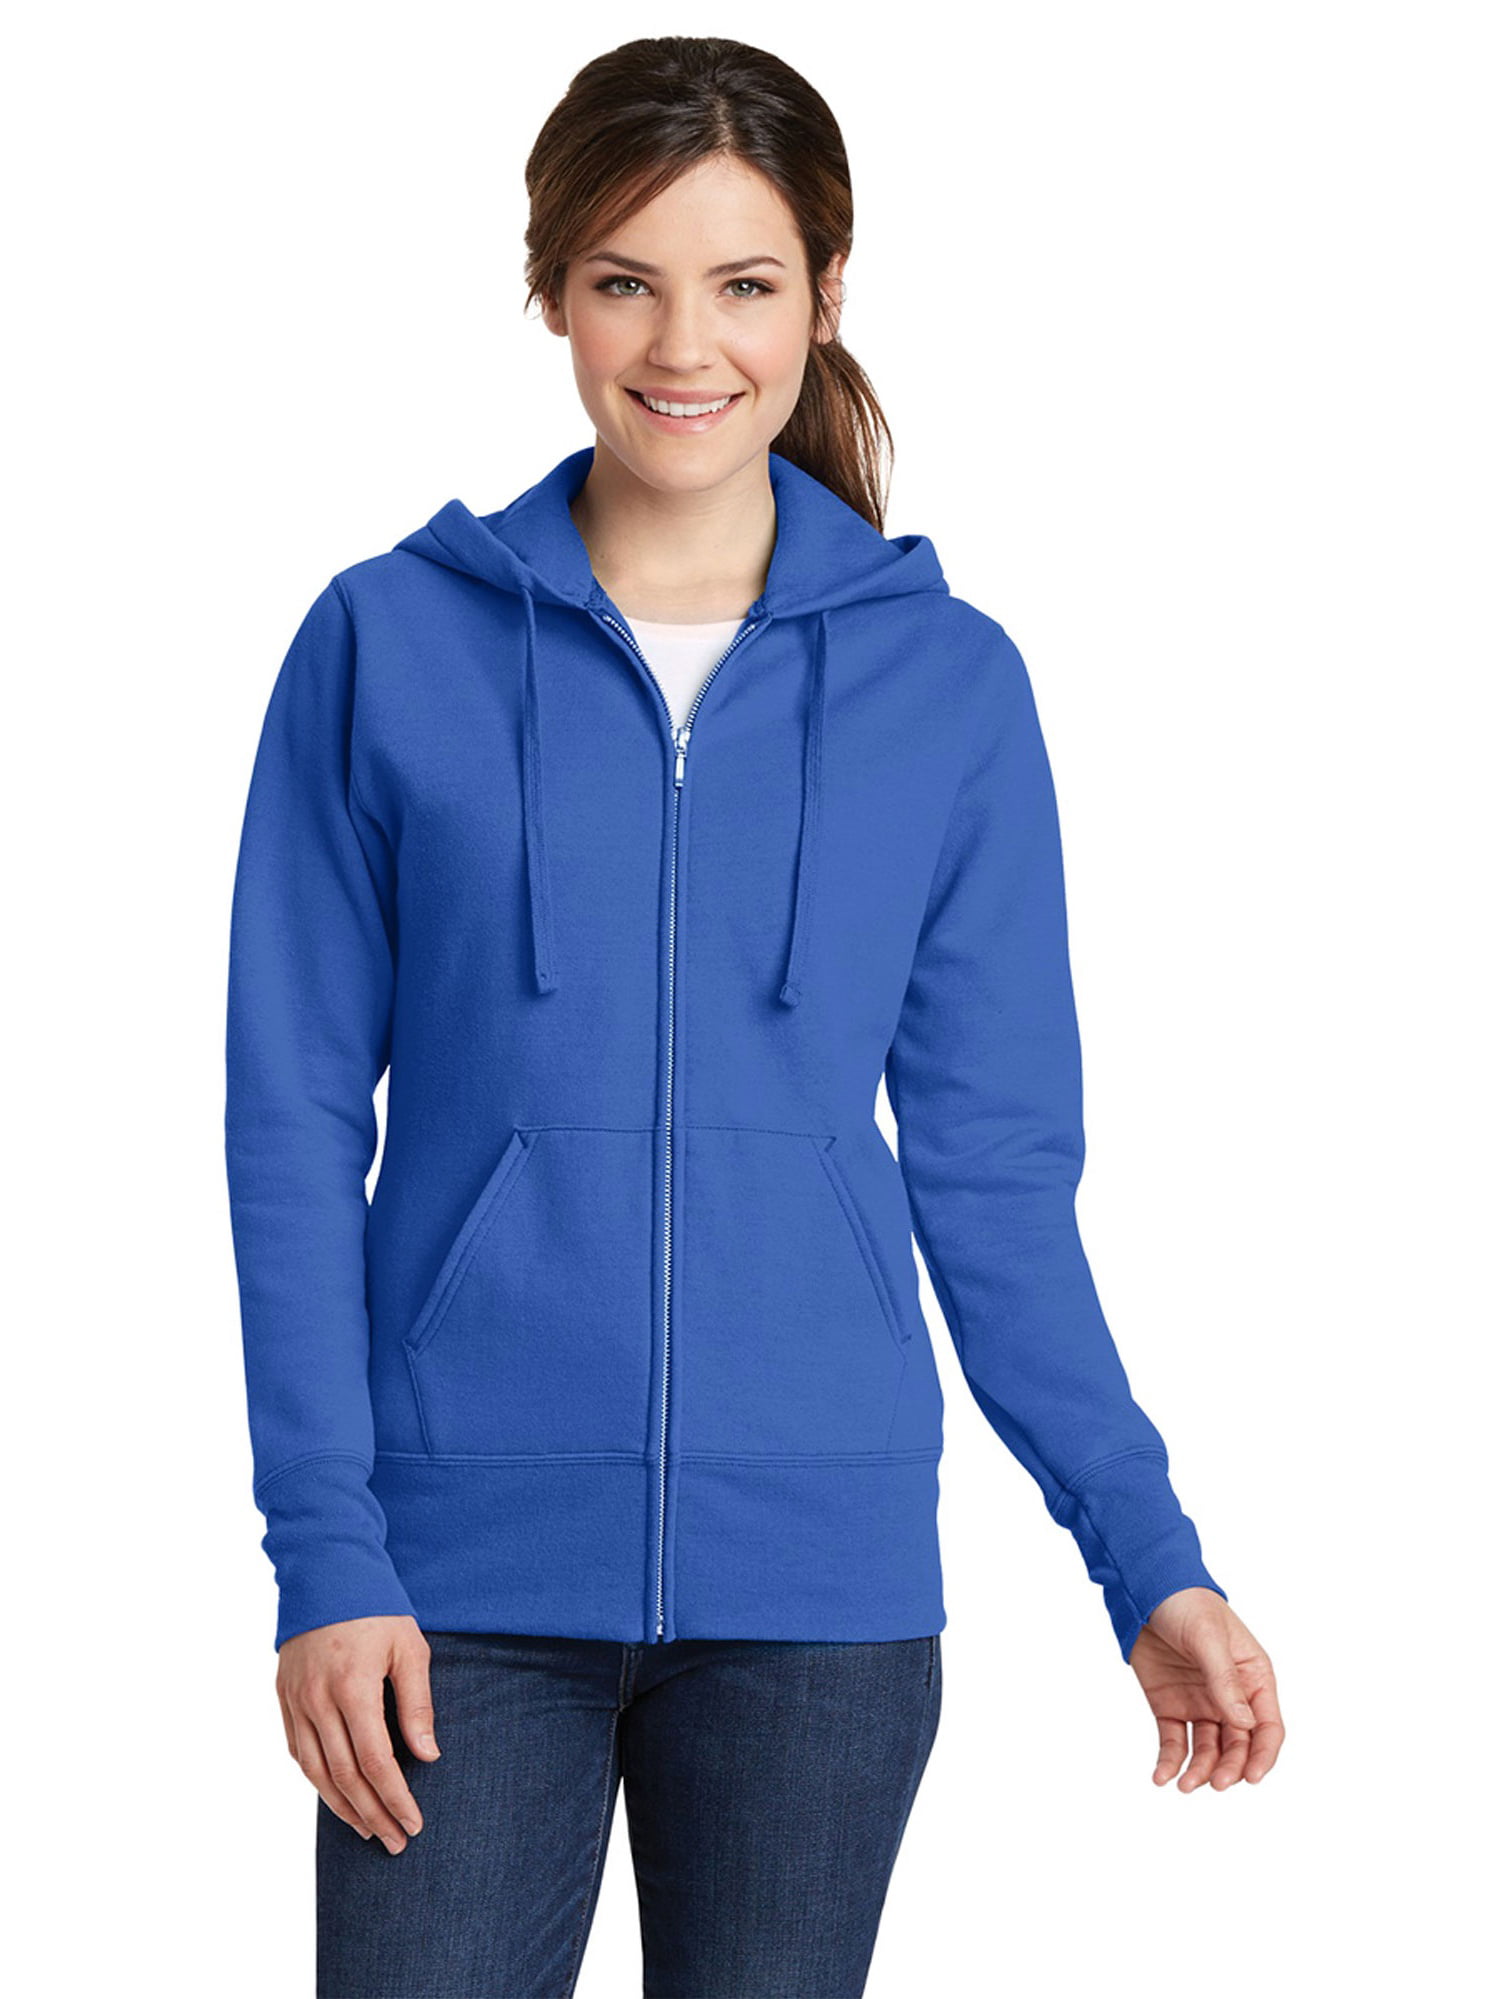 Port & Company - Port & Company Women's Core Fleece Full-Zip Hooded ...